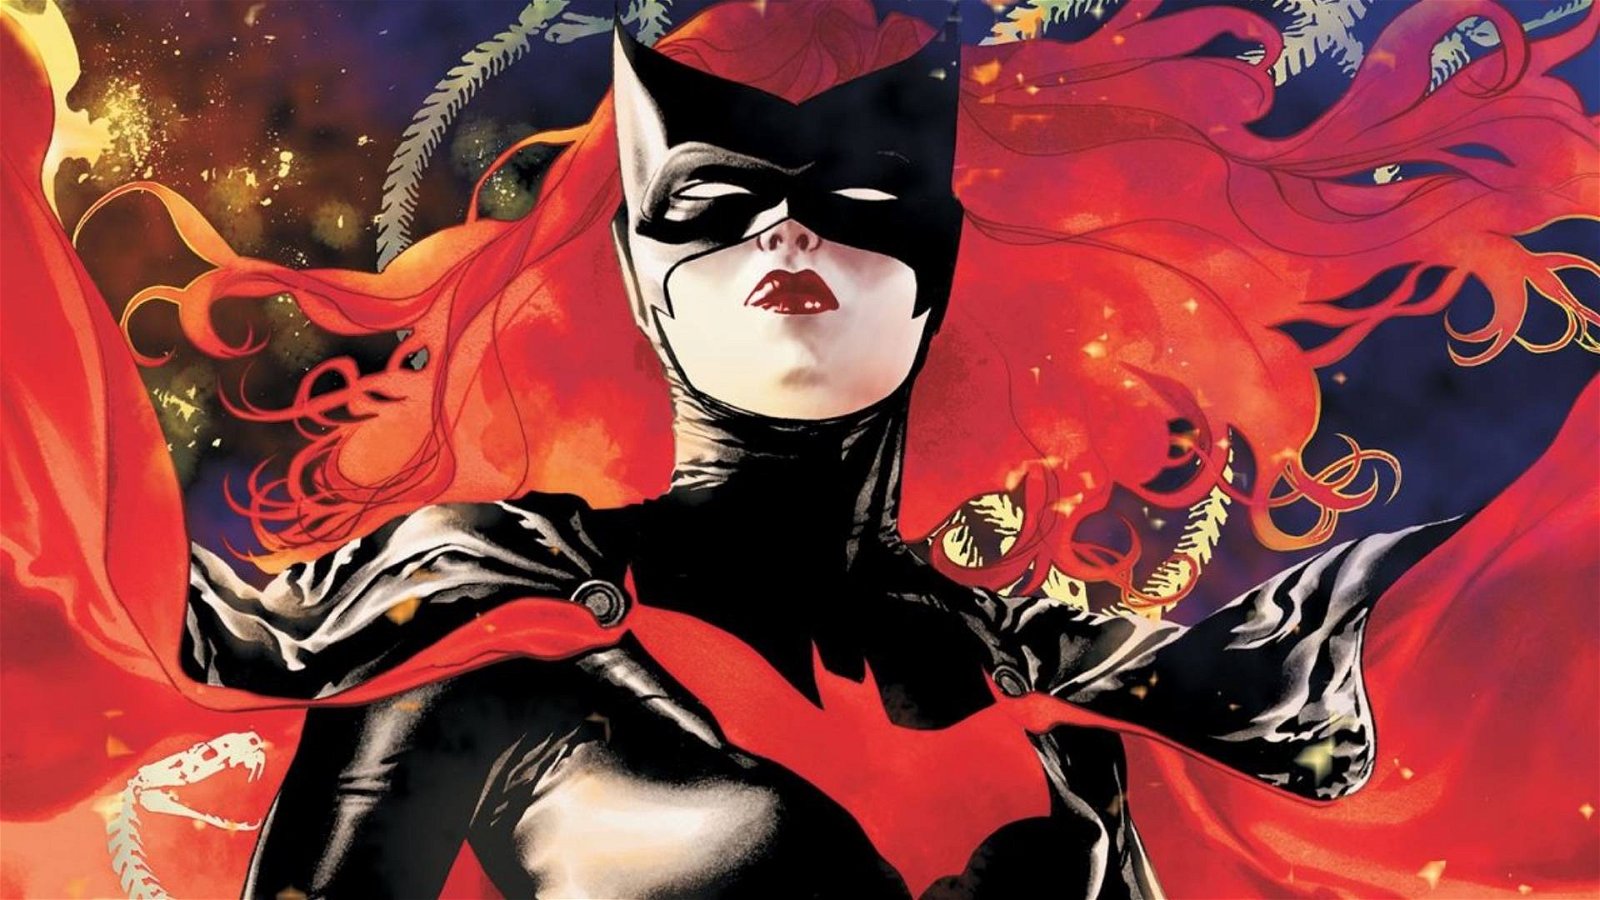 Immagine di Serie TV su Batwoman in arrivo!